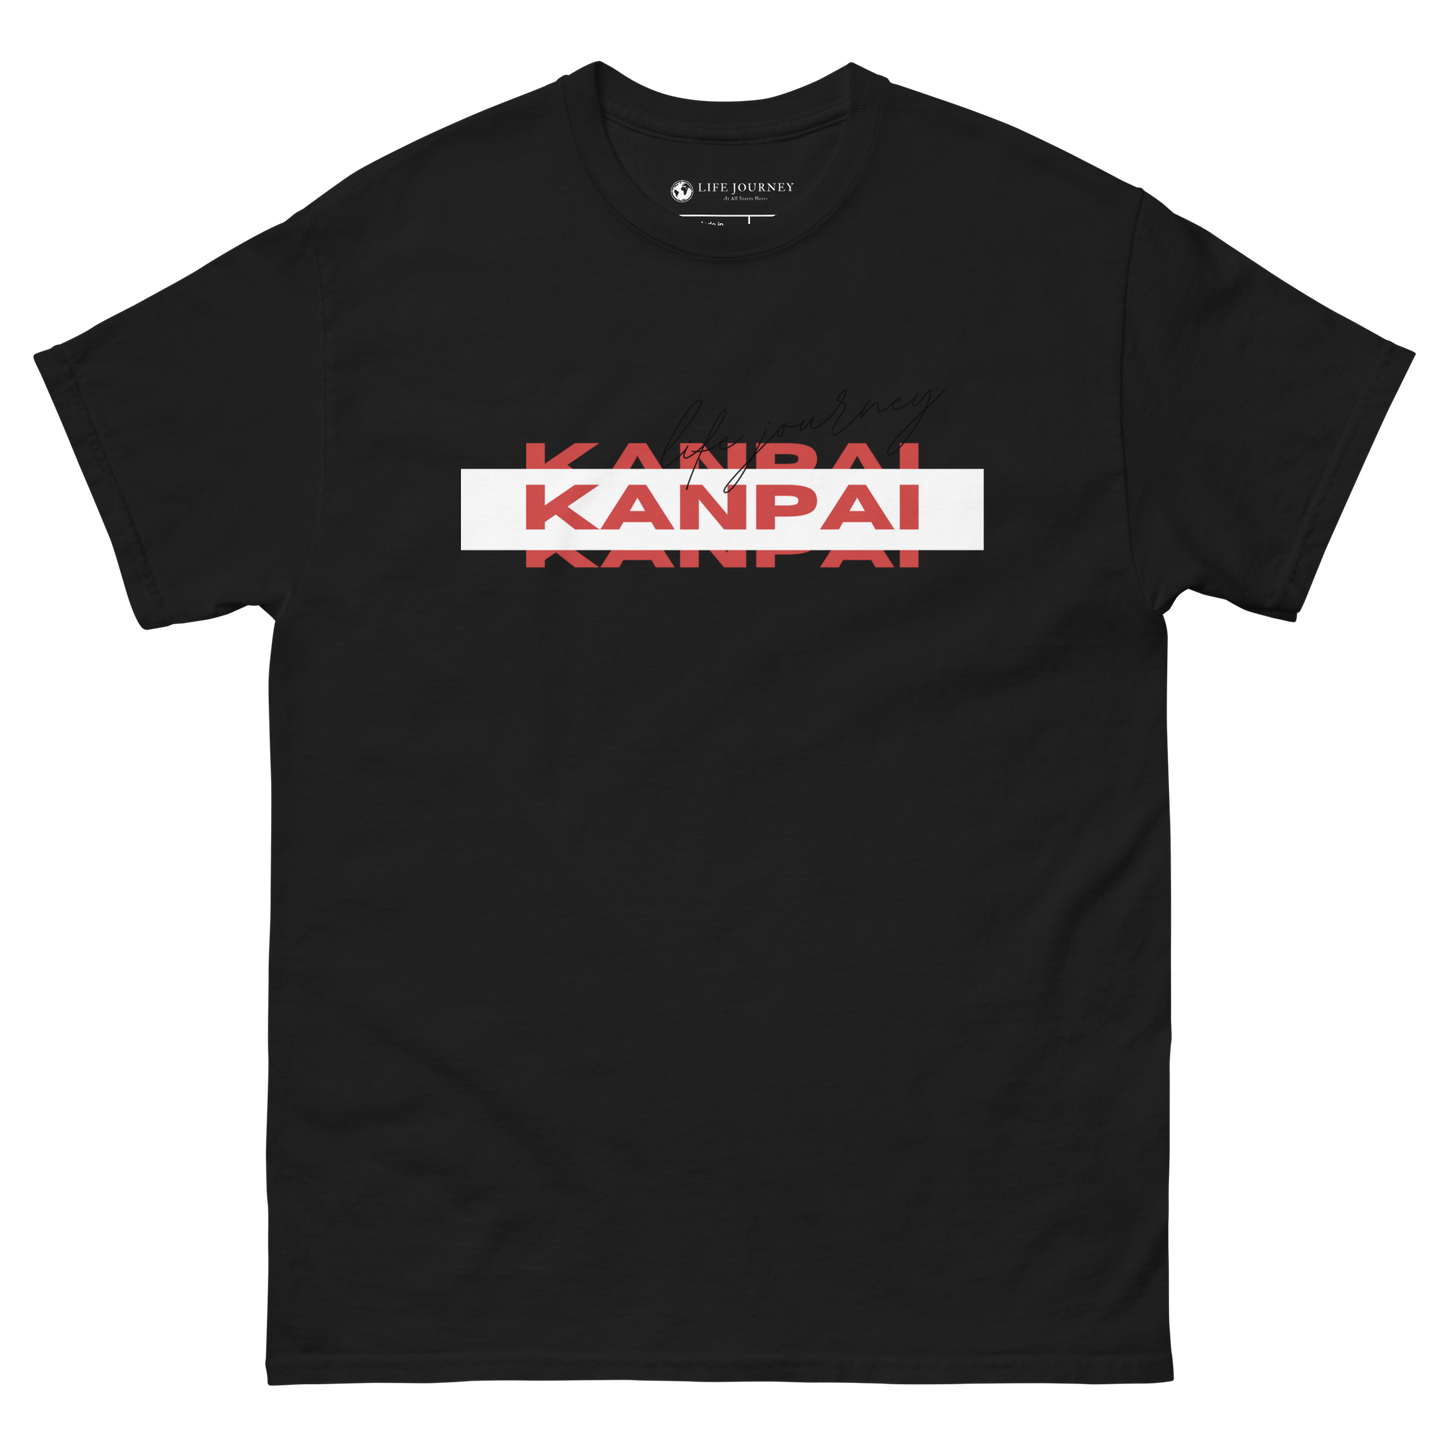 Men's classic tee Kanpai